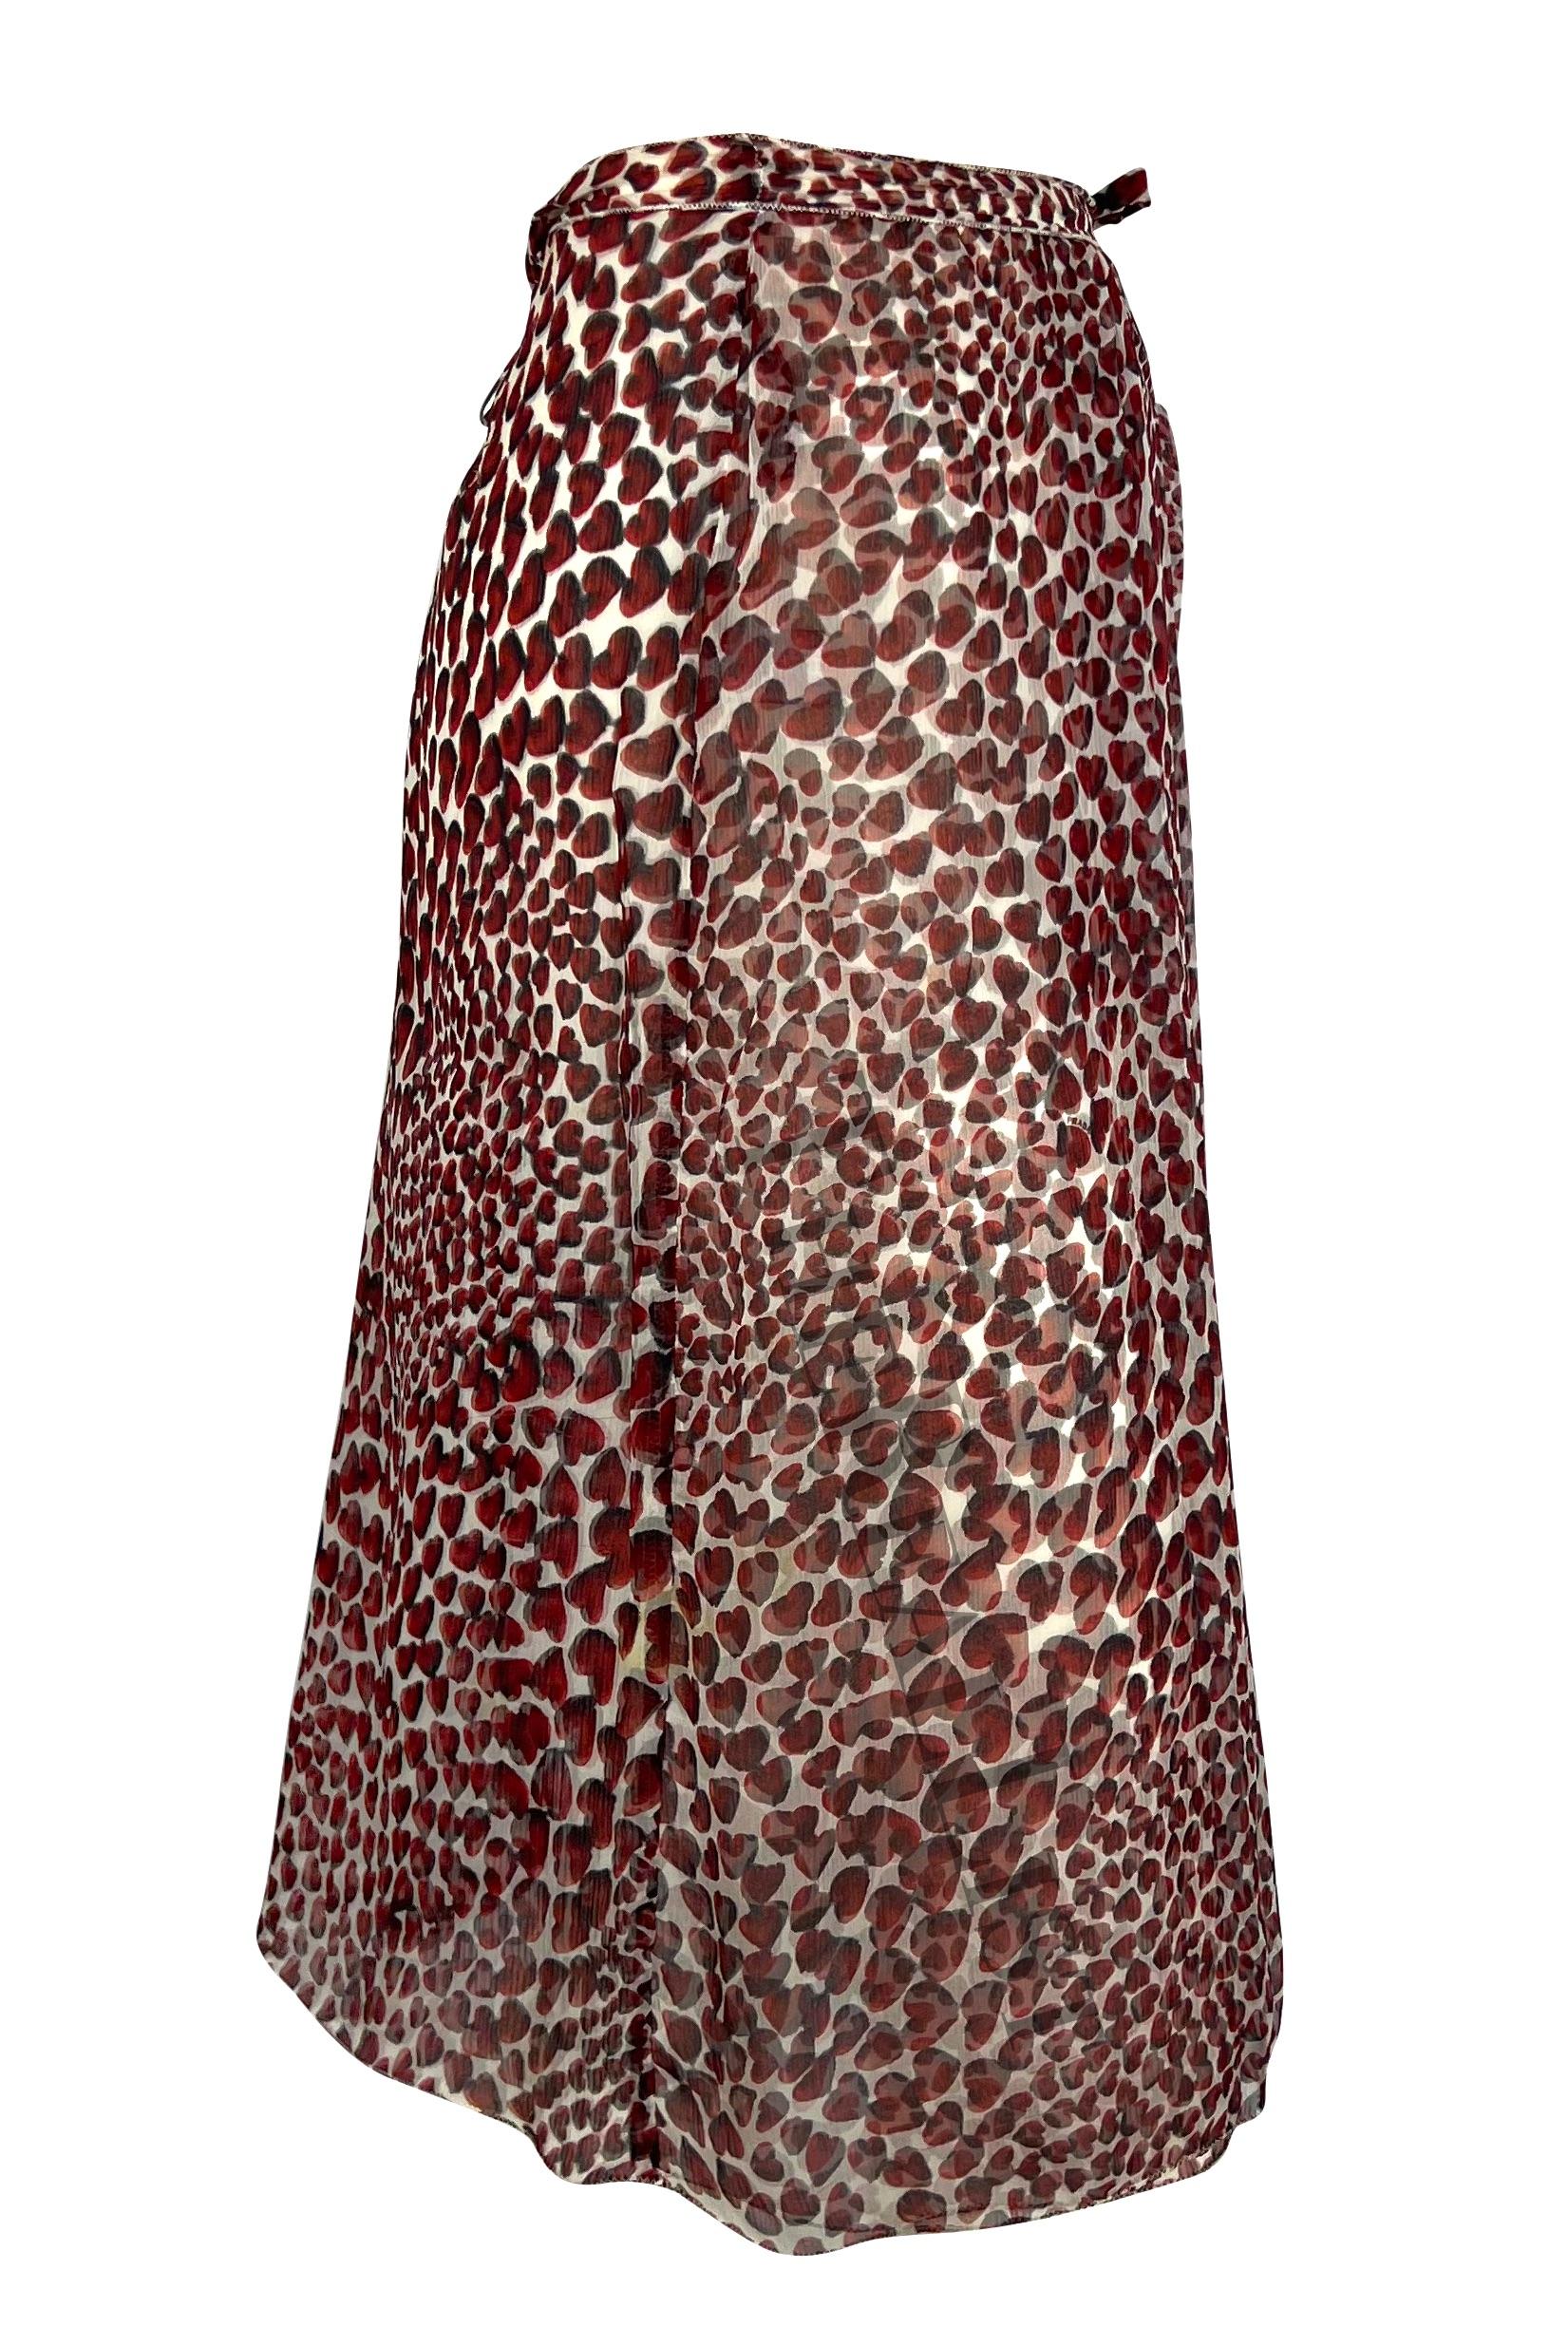 S/S 2000 Prada by Miuccia Semi-Sheer Heart Print Chiffon Wrap Skirt For Sale 2